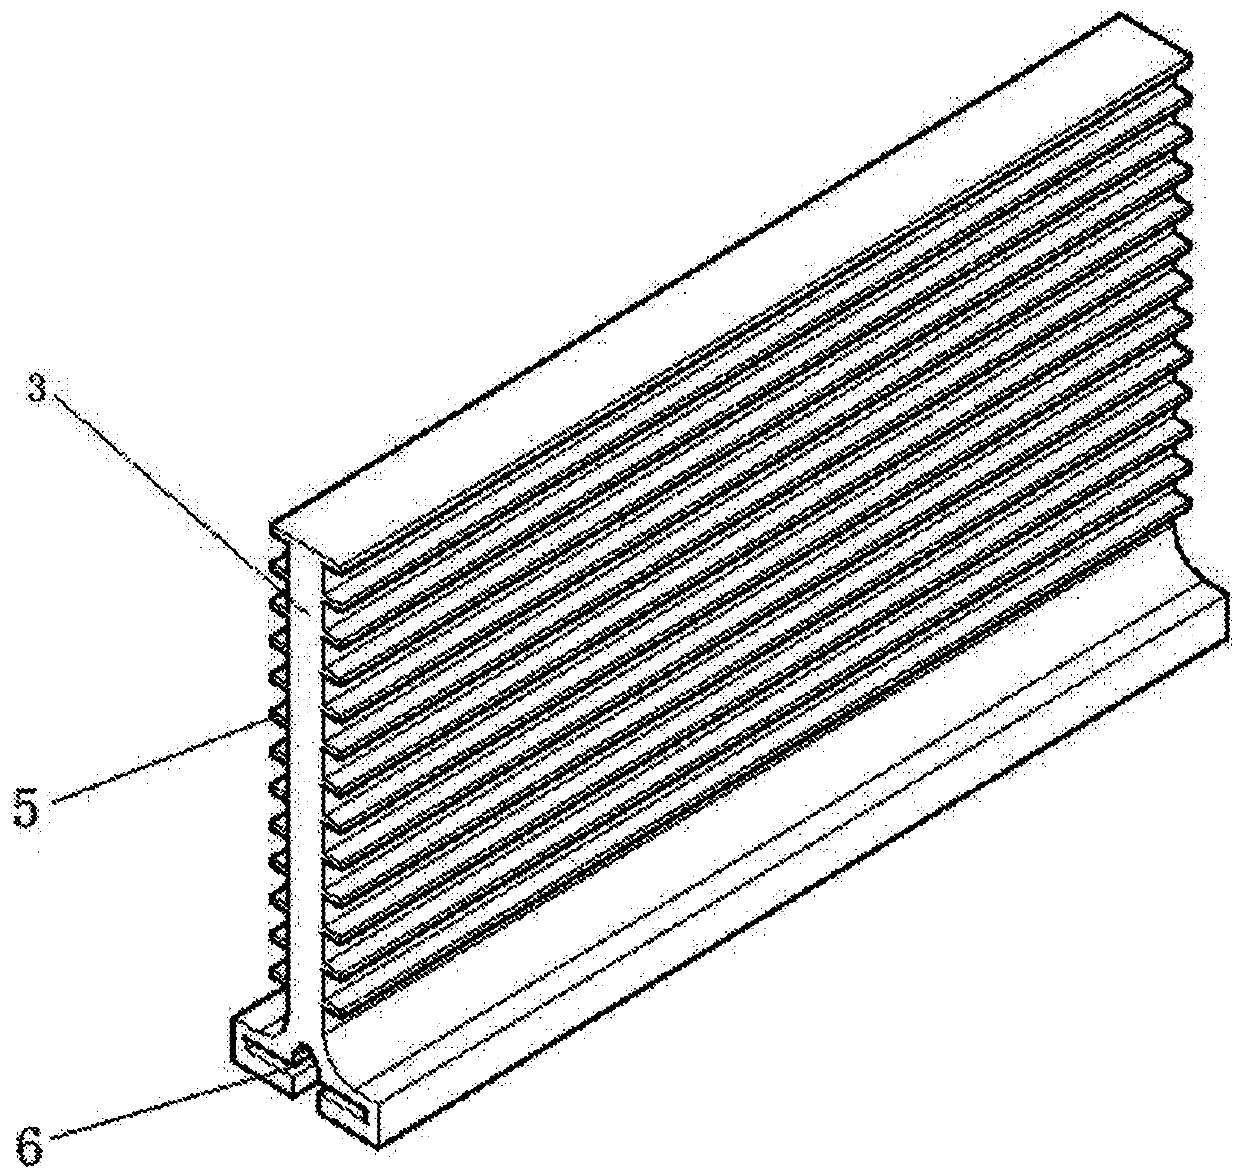 A plug-in high-efficiency heat conduction radiator